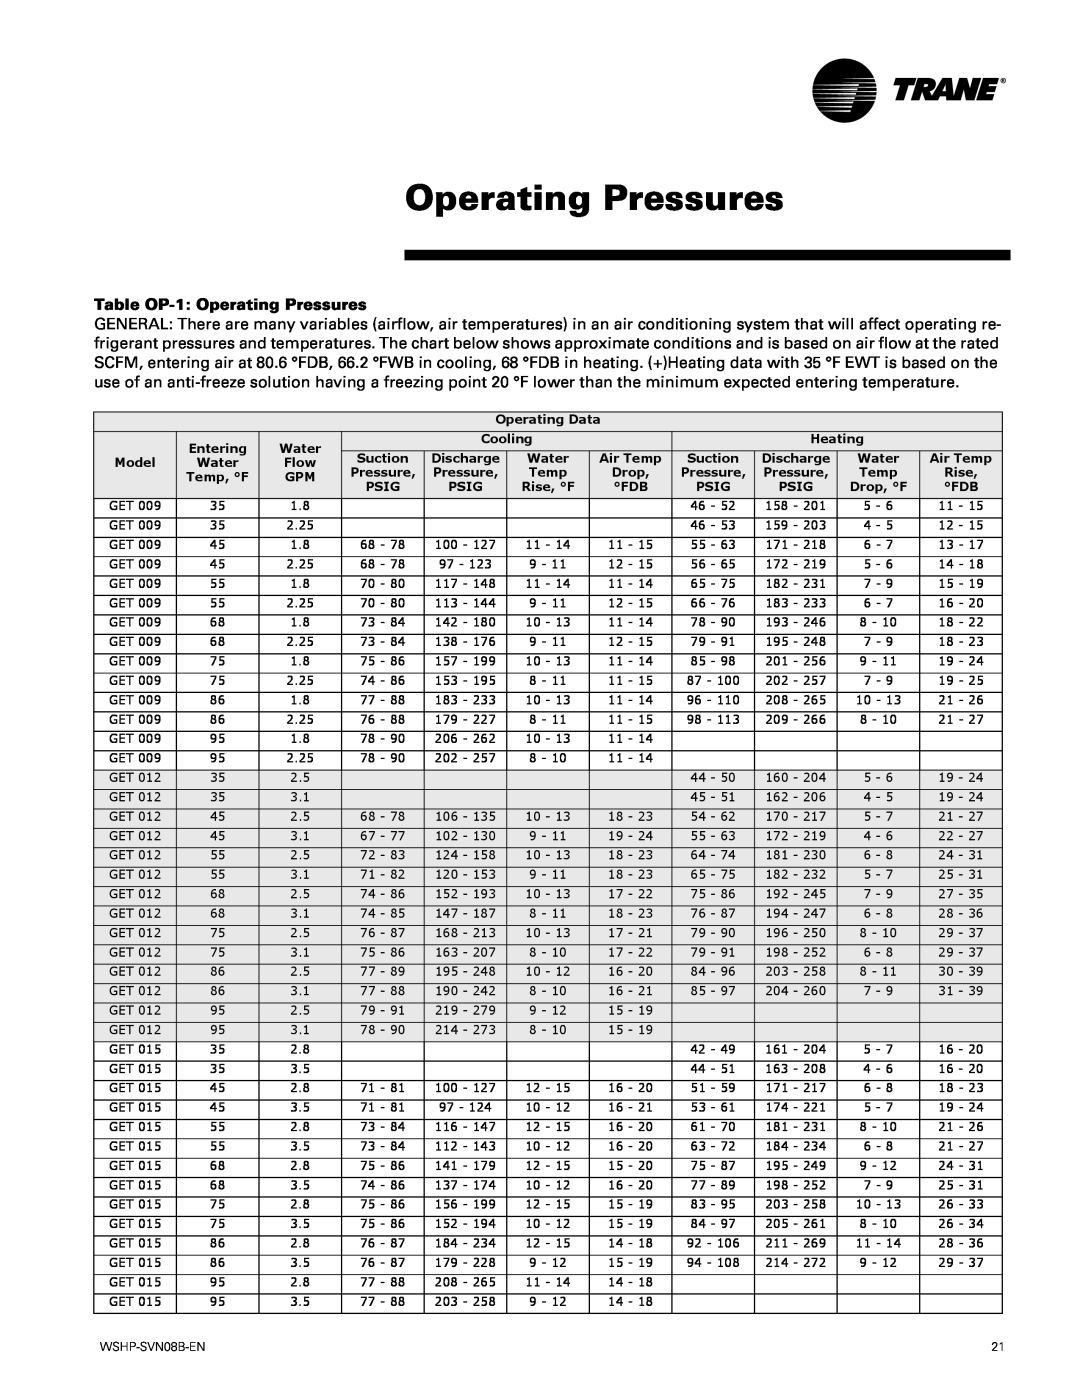 Trane GETB manual Table OP-1 Operating Pressures 